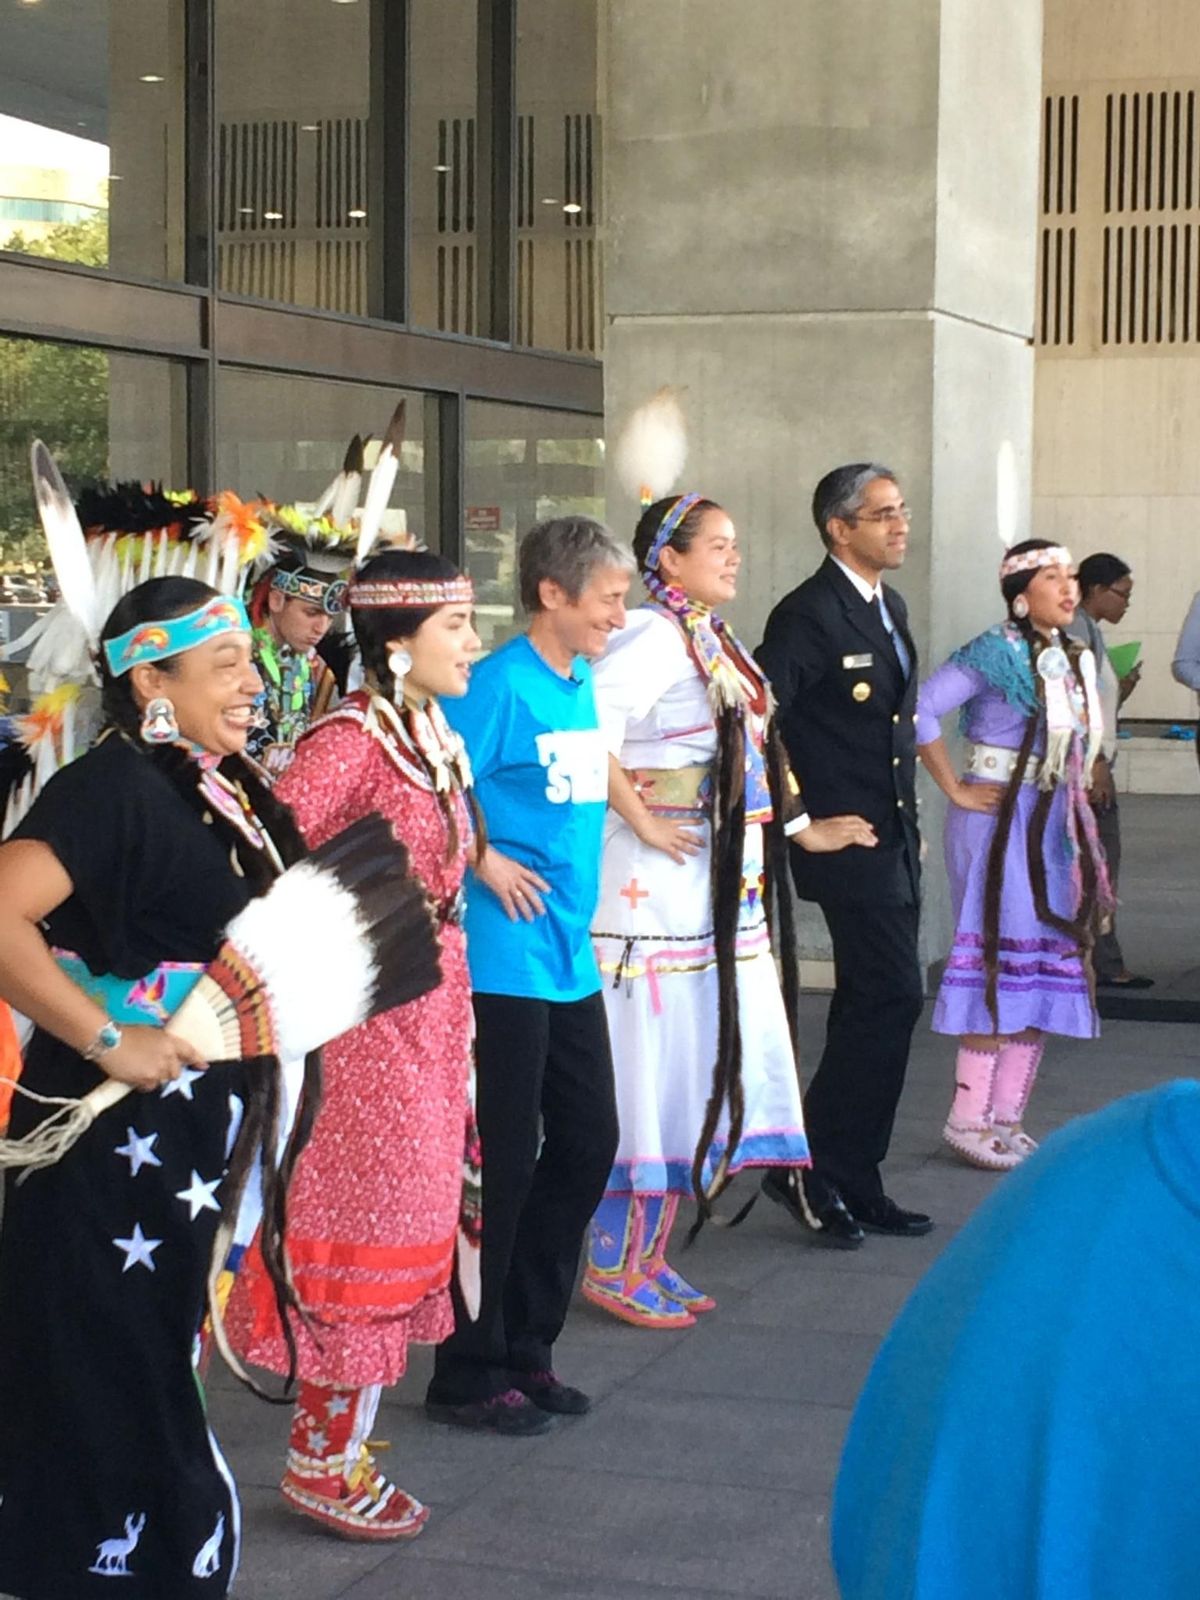 Coeur d’Alene Tribe members dance to “Powwow Sweat” in Washington D.C. on Tuesday, Sept. 27, 2016. From left to right: Lovina Louie, Valerie Adrian, U.S. Secretary of the Interior Sally Jewell, Shedaeza Hodge, U.S. Surgeon General Vivek Murthy, Imani Atone. (Coeur d’Alene Tribe)